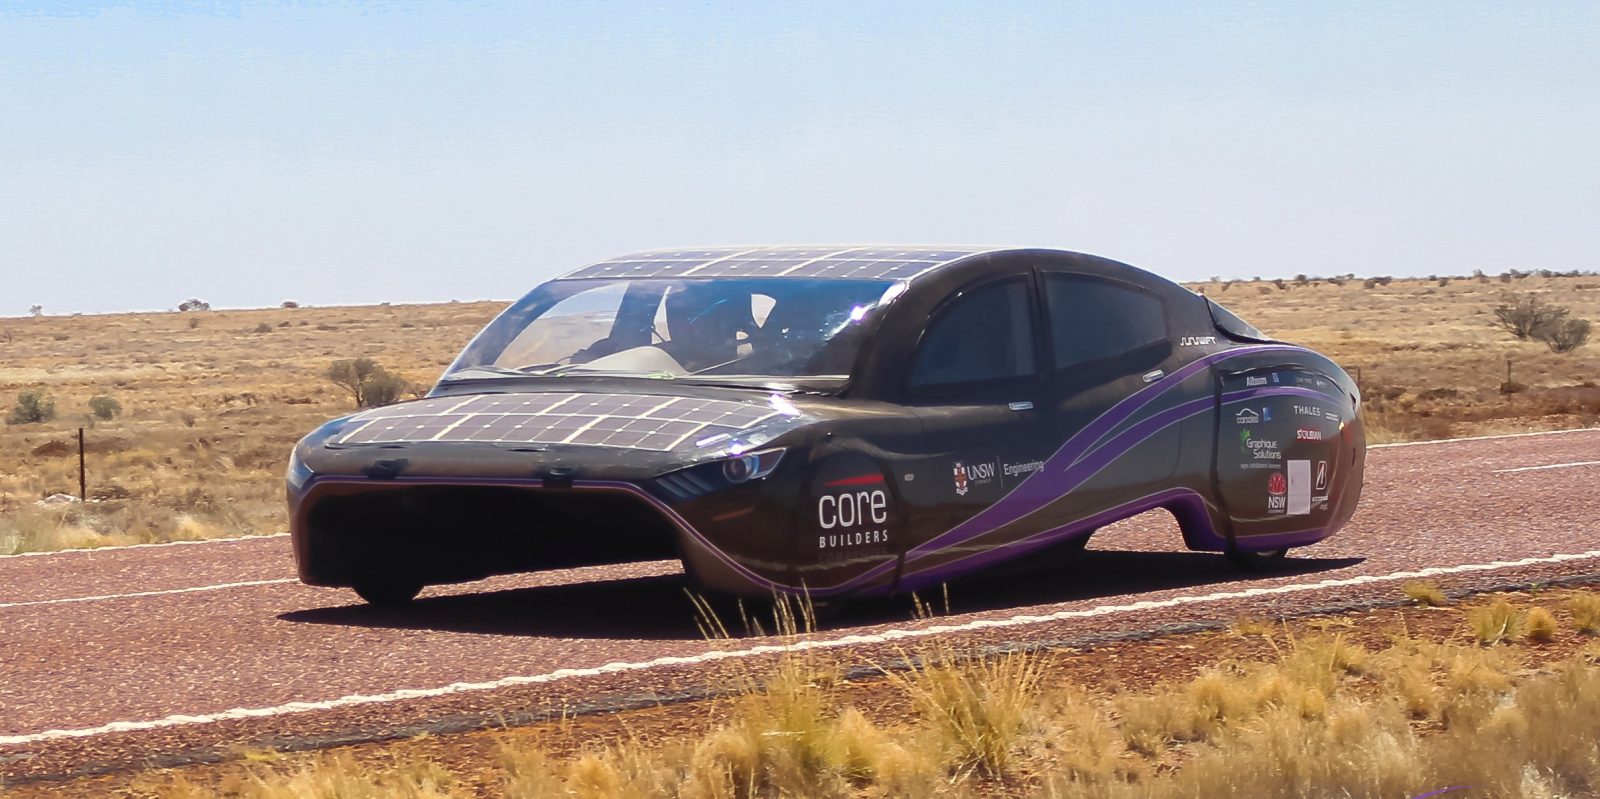 solar-powered car violet